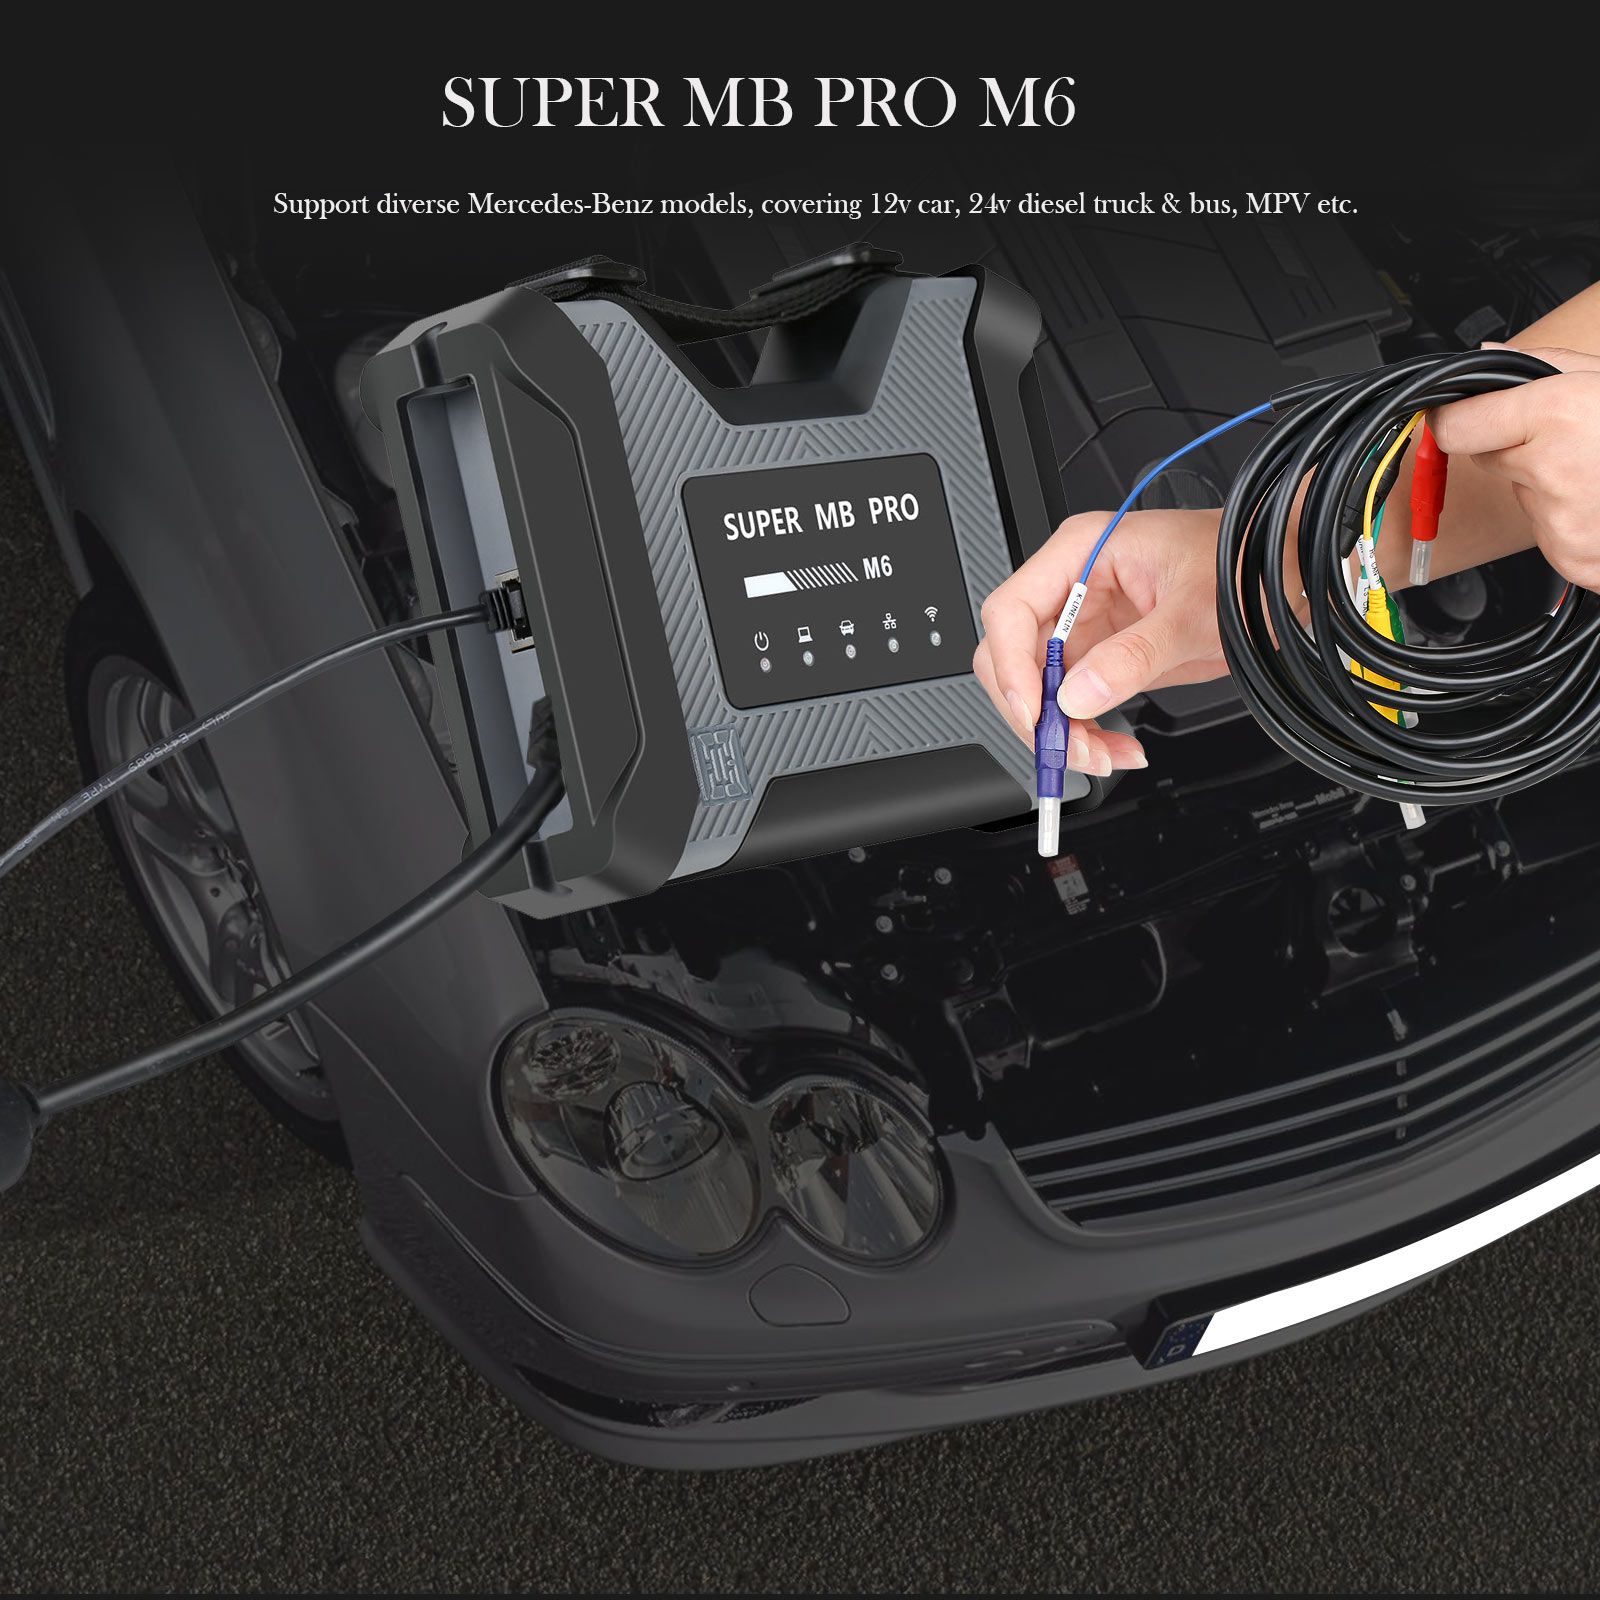 Herramienta de diagnóstico inalámbrico super MB pro M6 + Cable obd2 de 16 Pines + cable LAN + Cable 14 Pines para el diagnóstico de camiones Benz